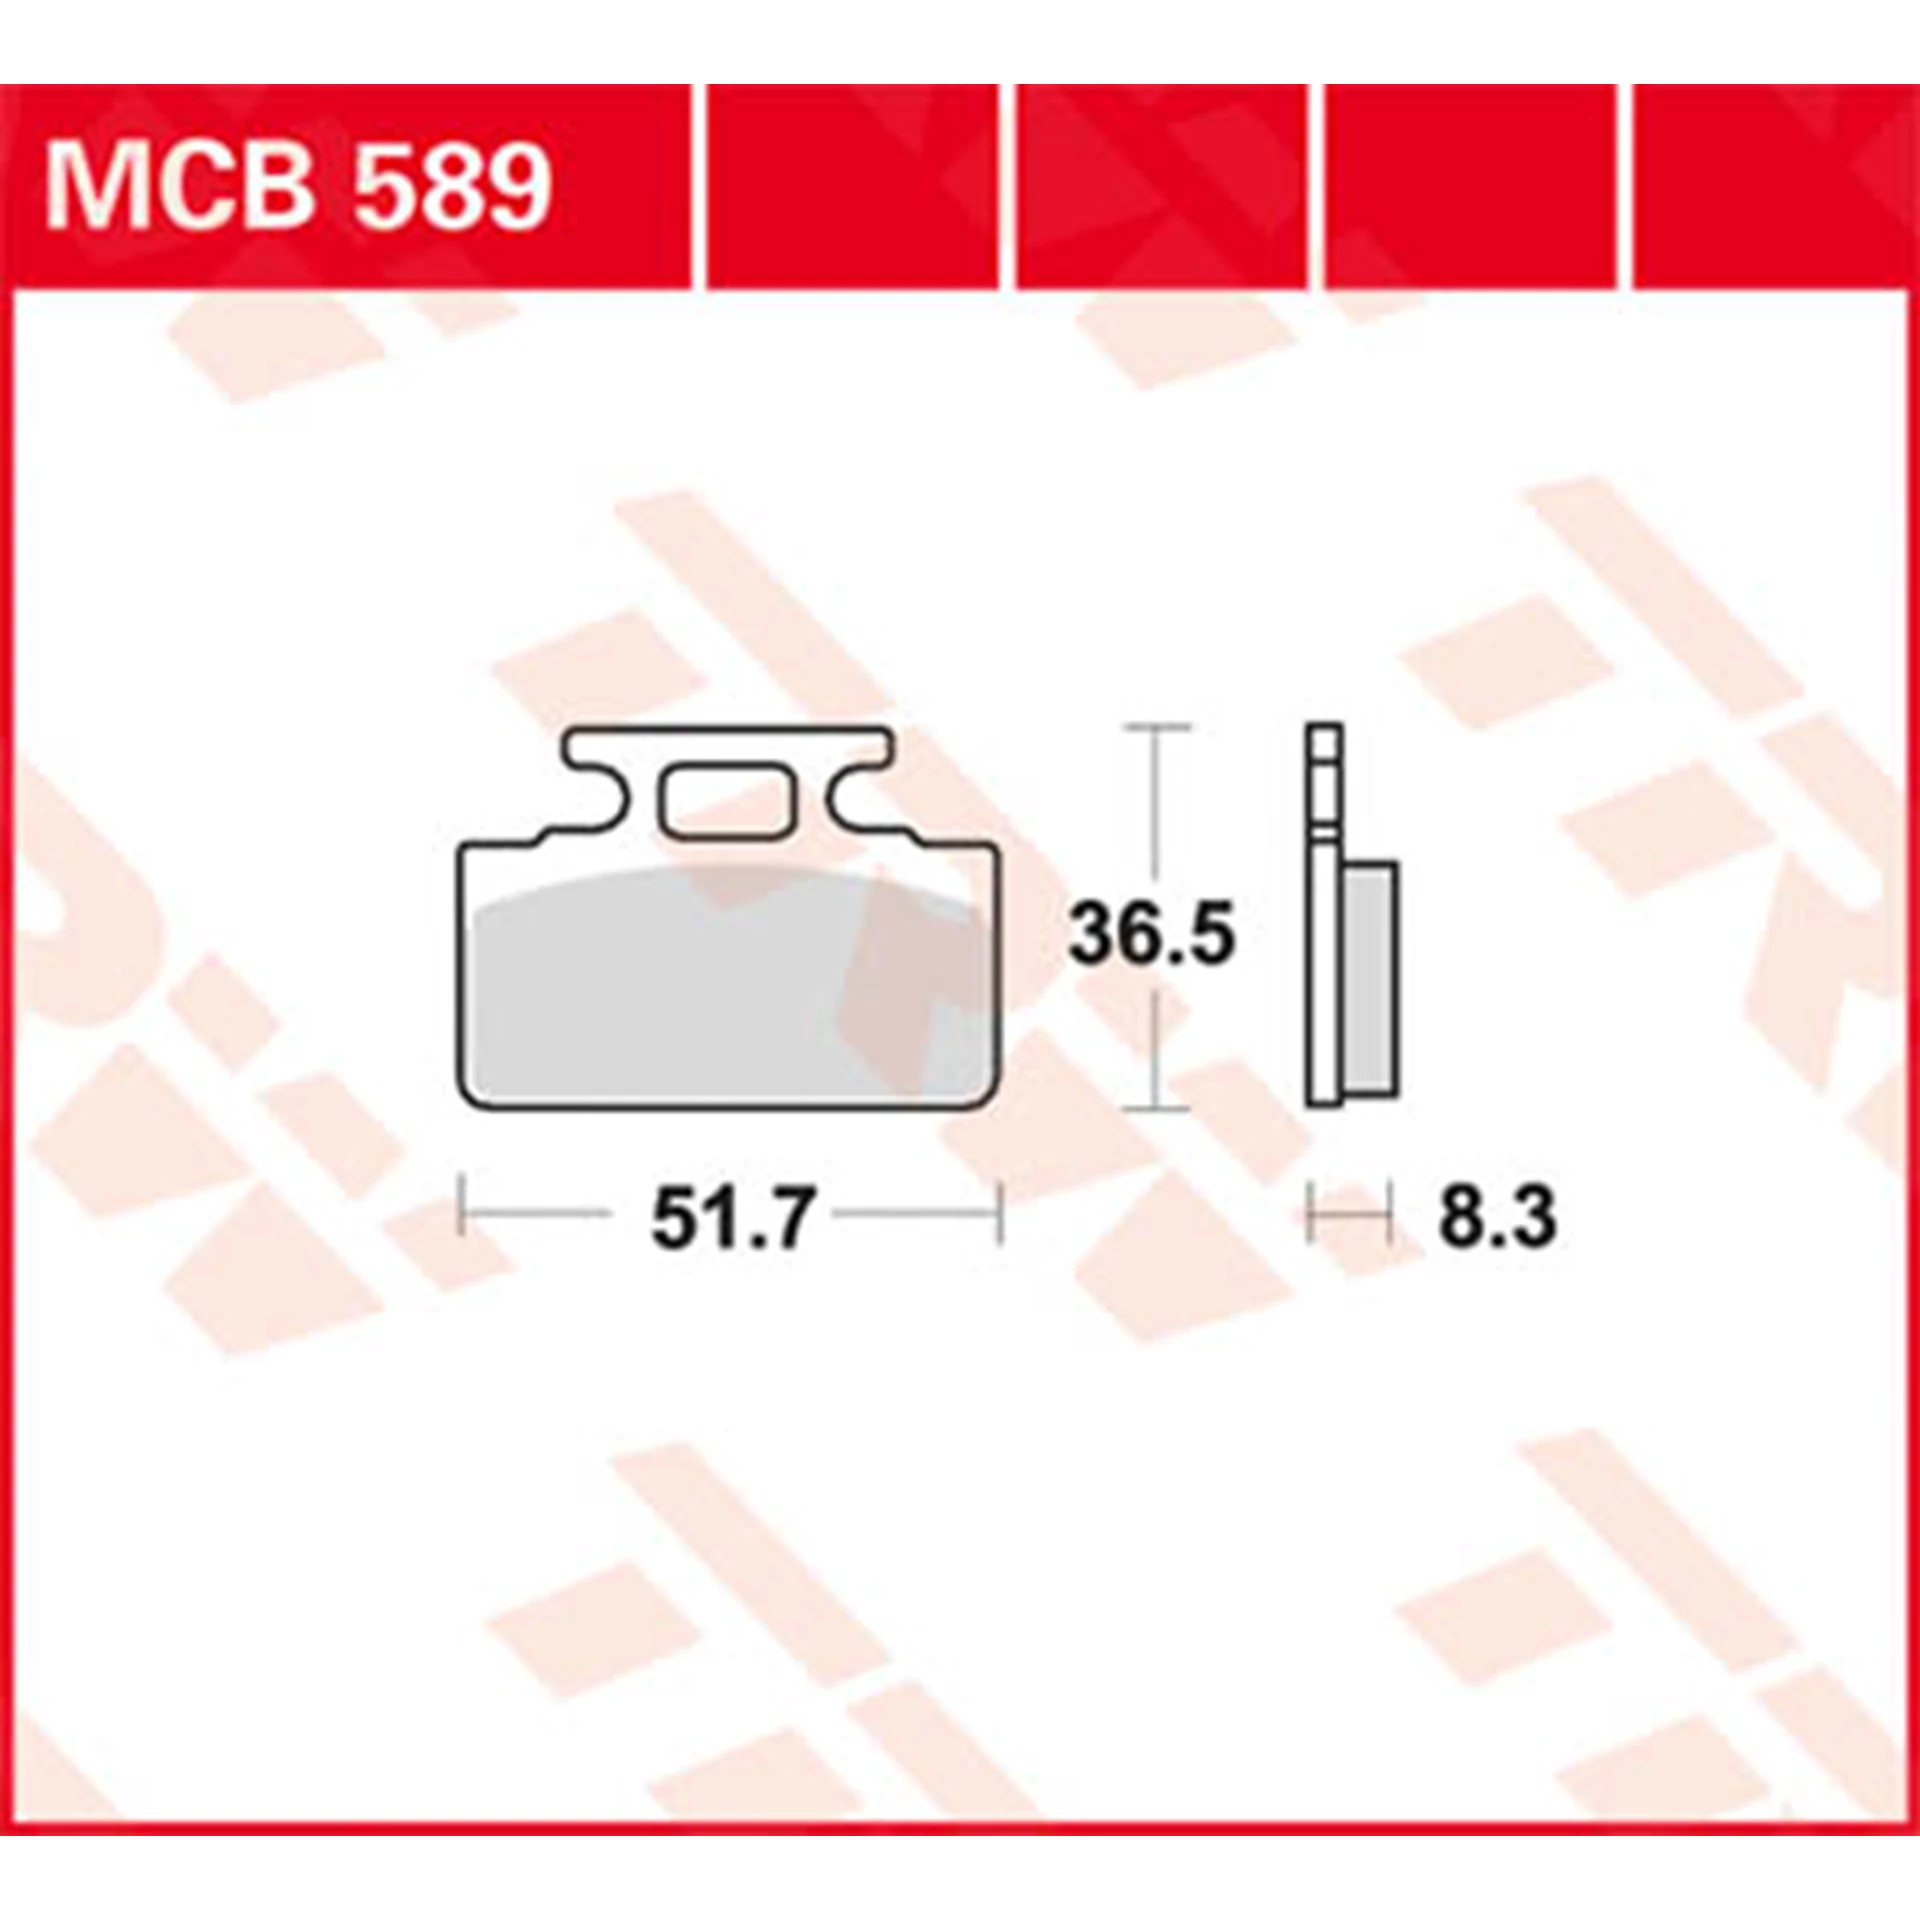 MCB589.jpg